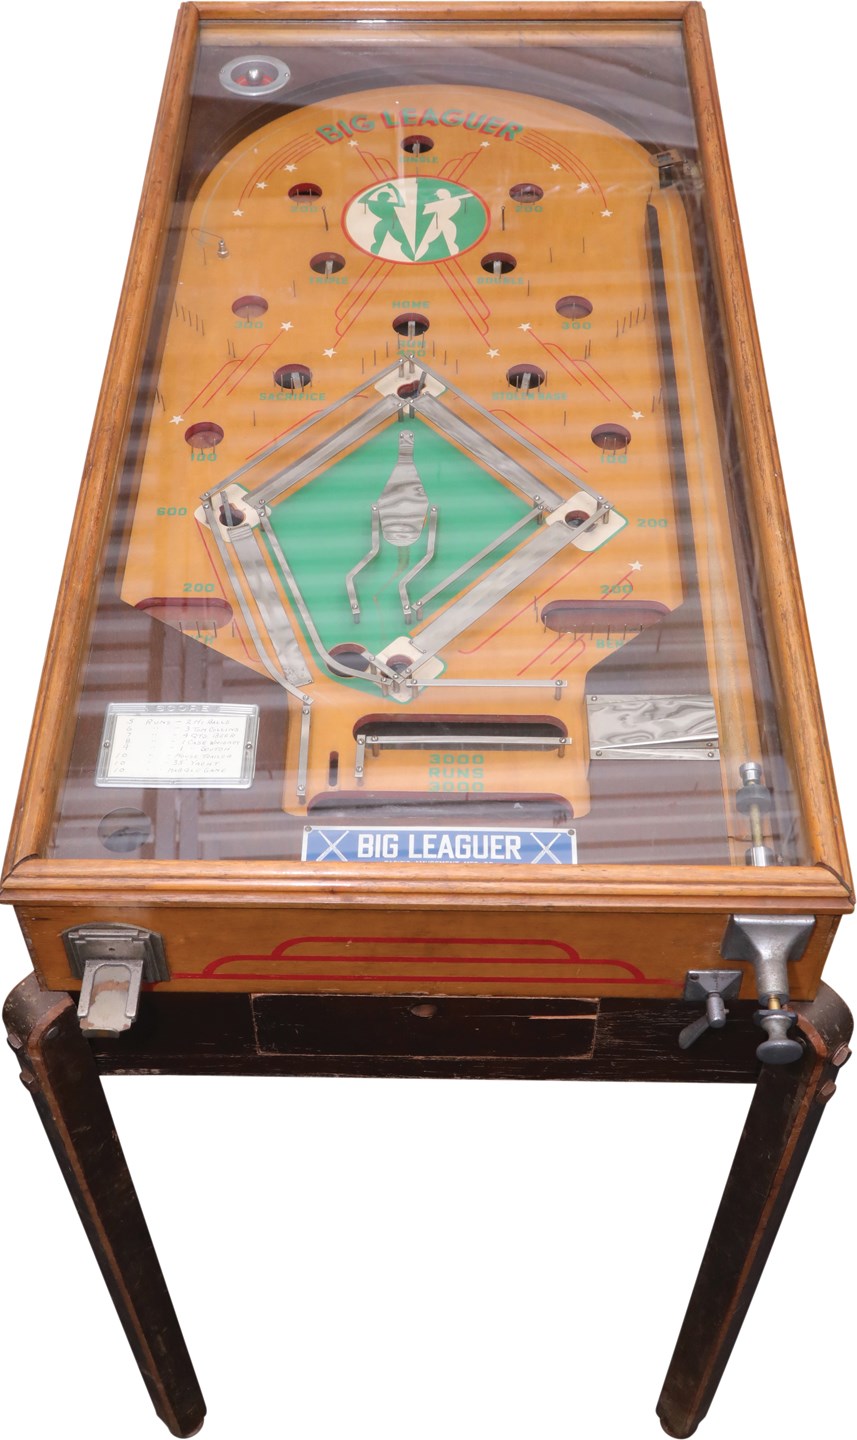 Baseball Memorabilia - 1930s Big Leaguer Baseball Machine